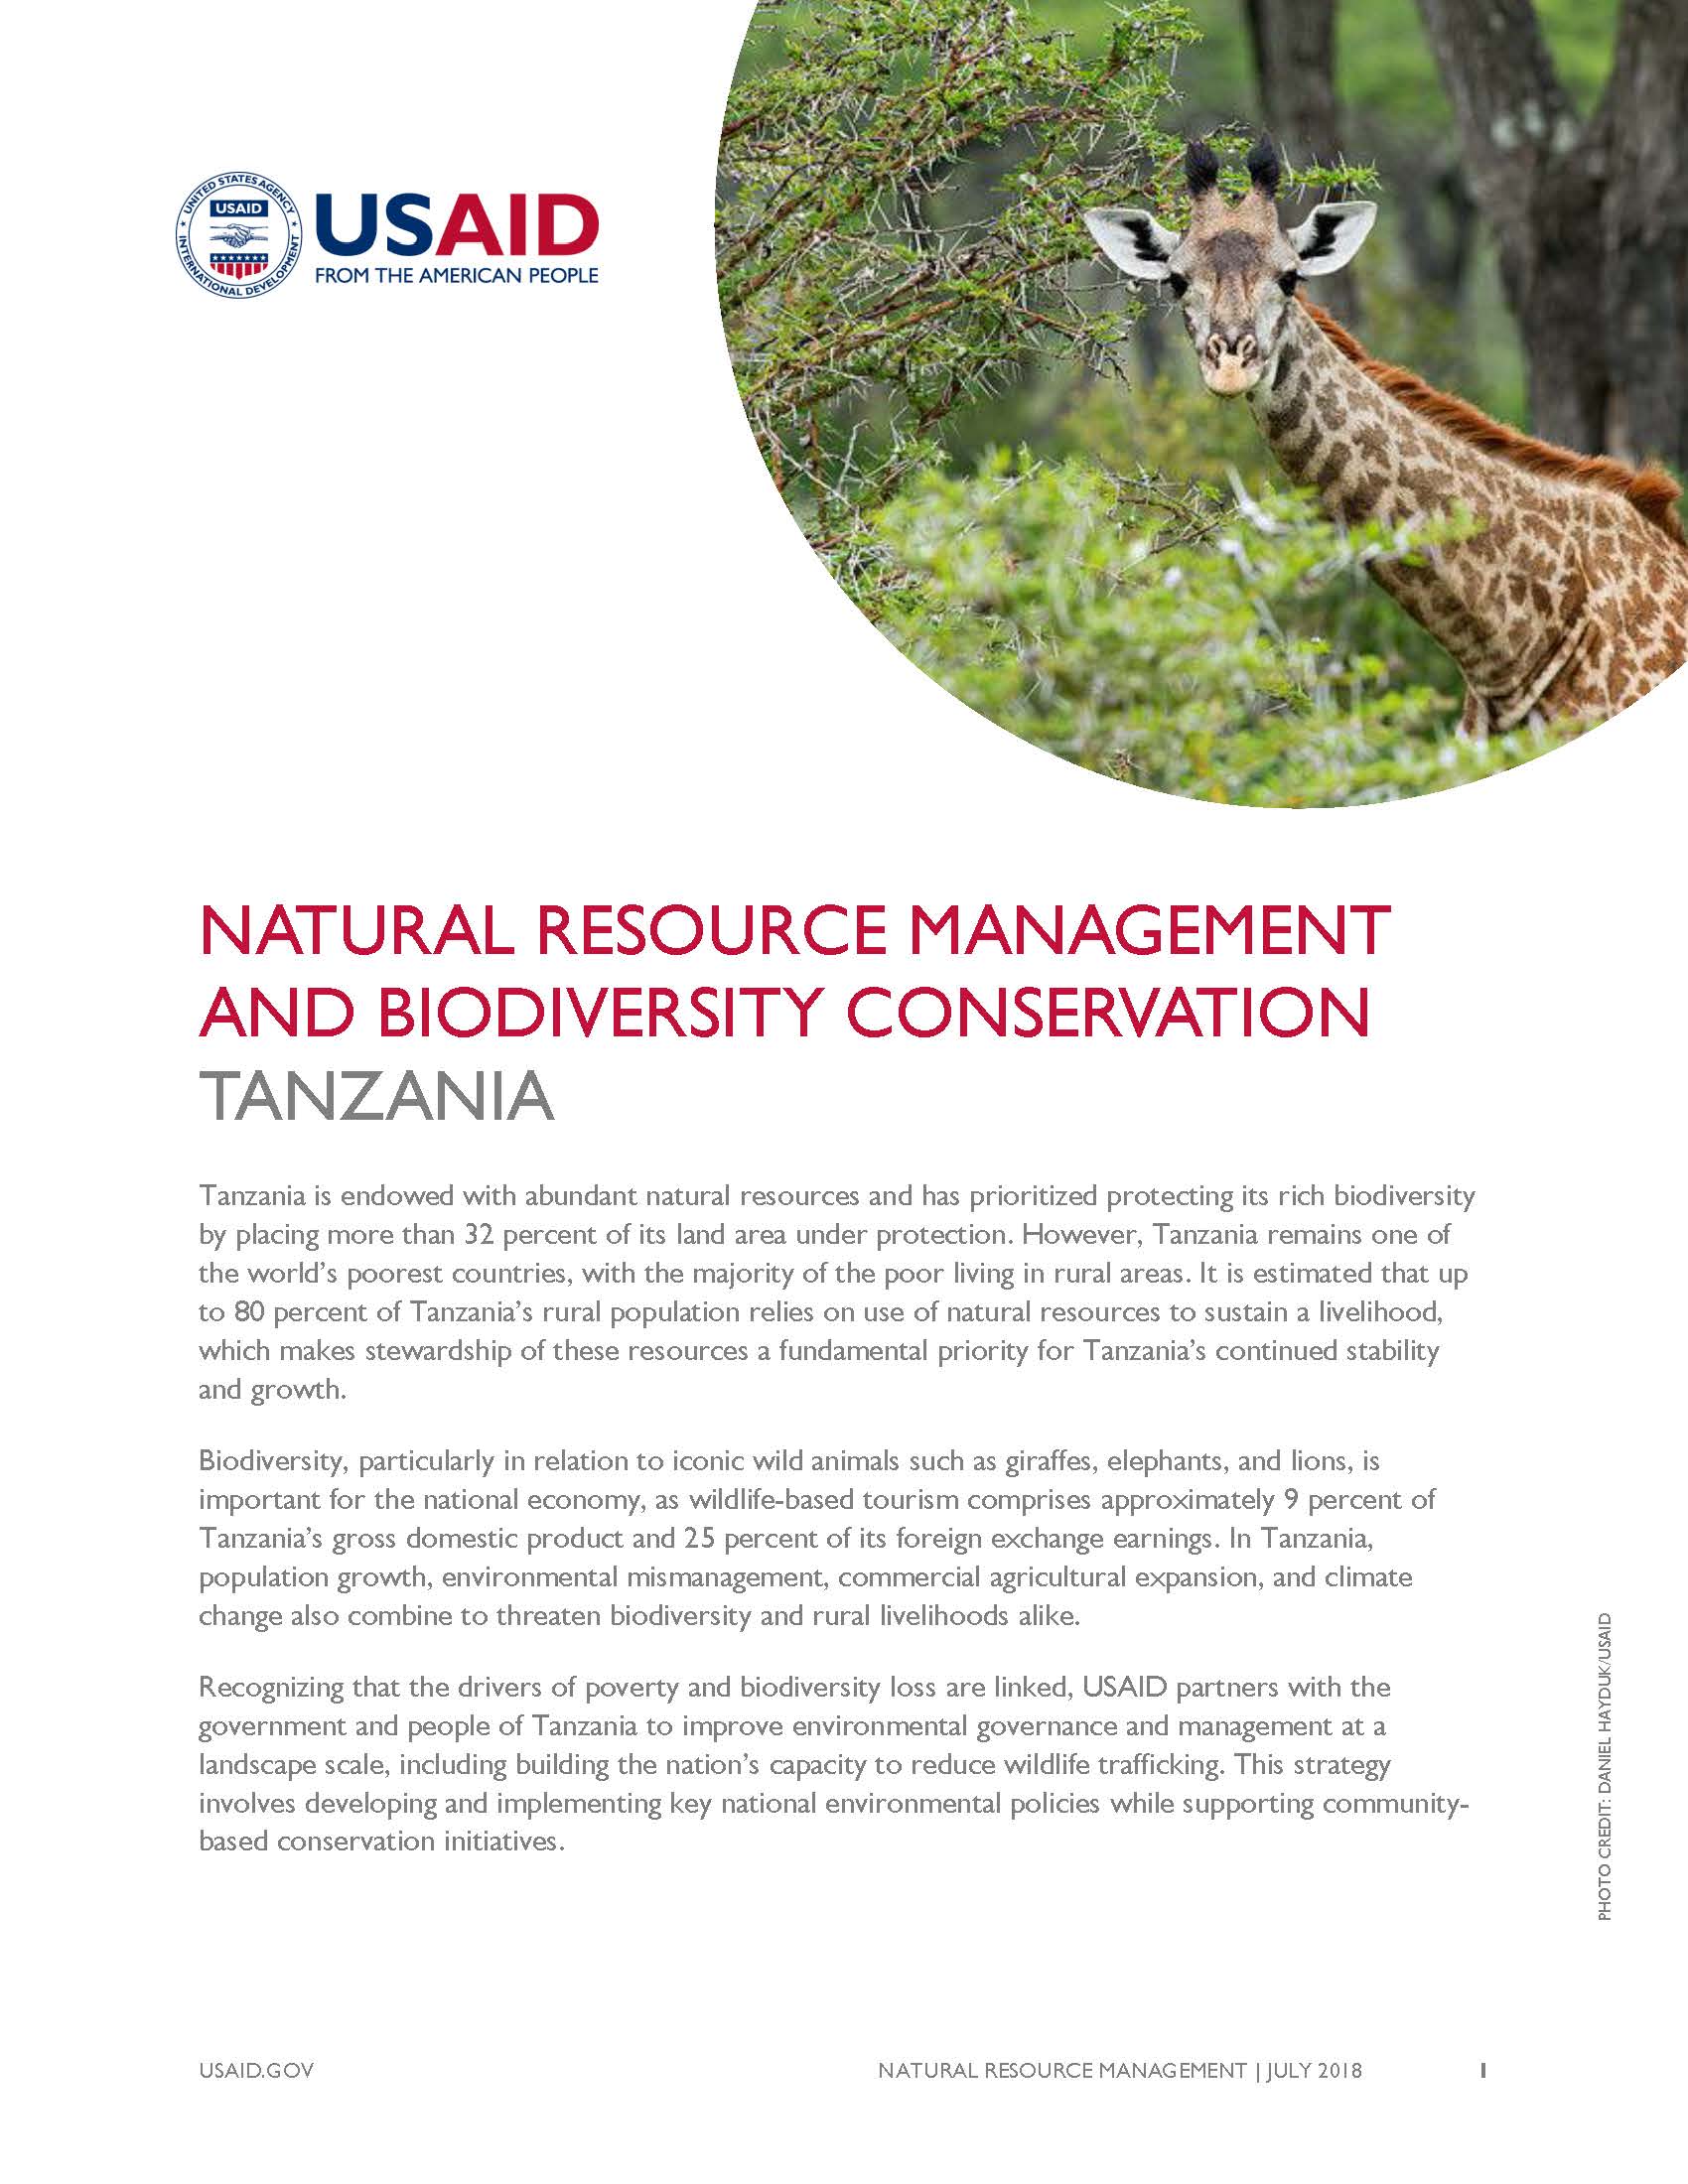 Tanzania Natural Resource Management Fact Sheet